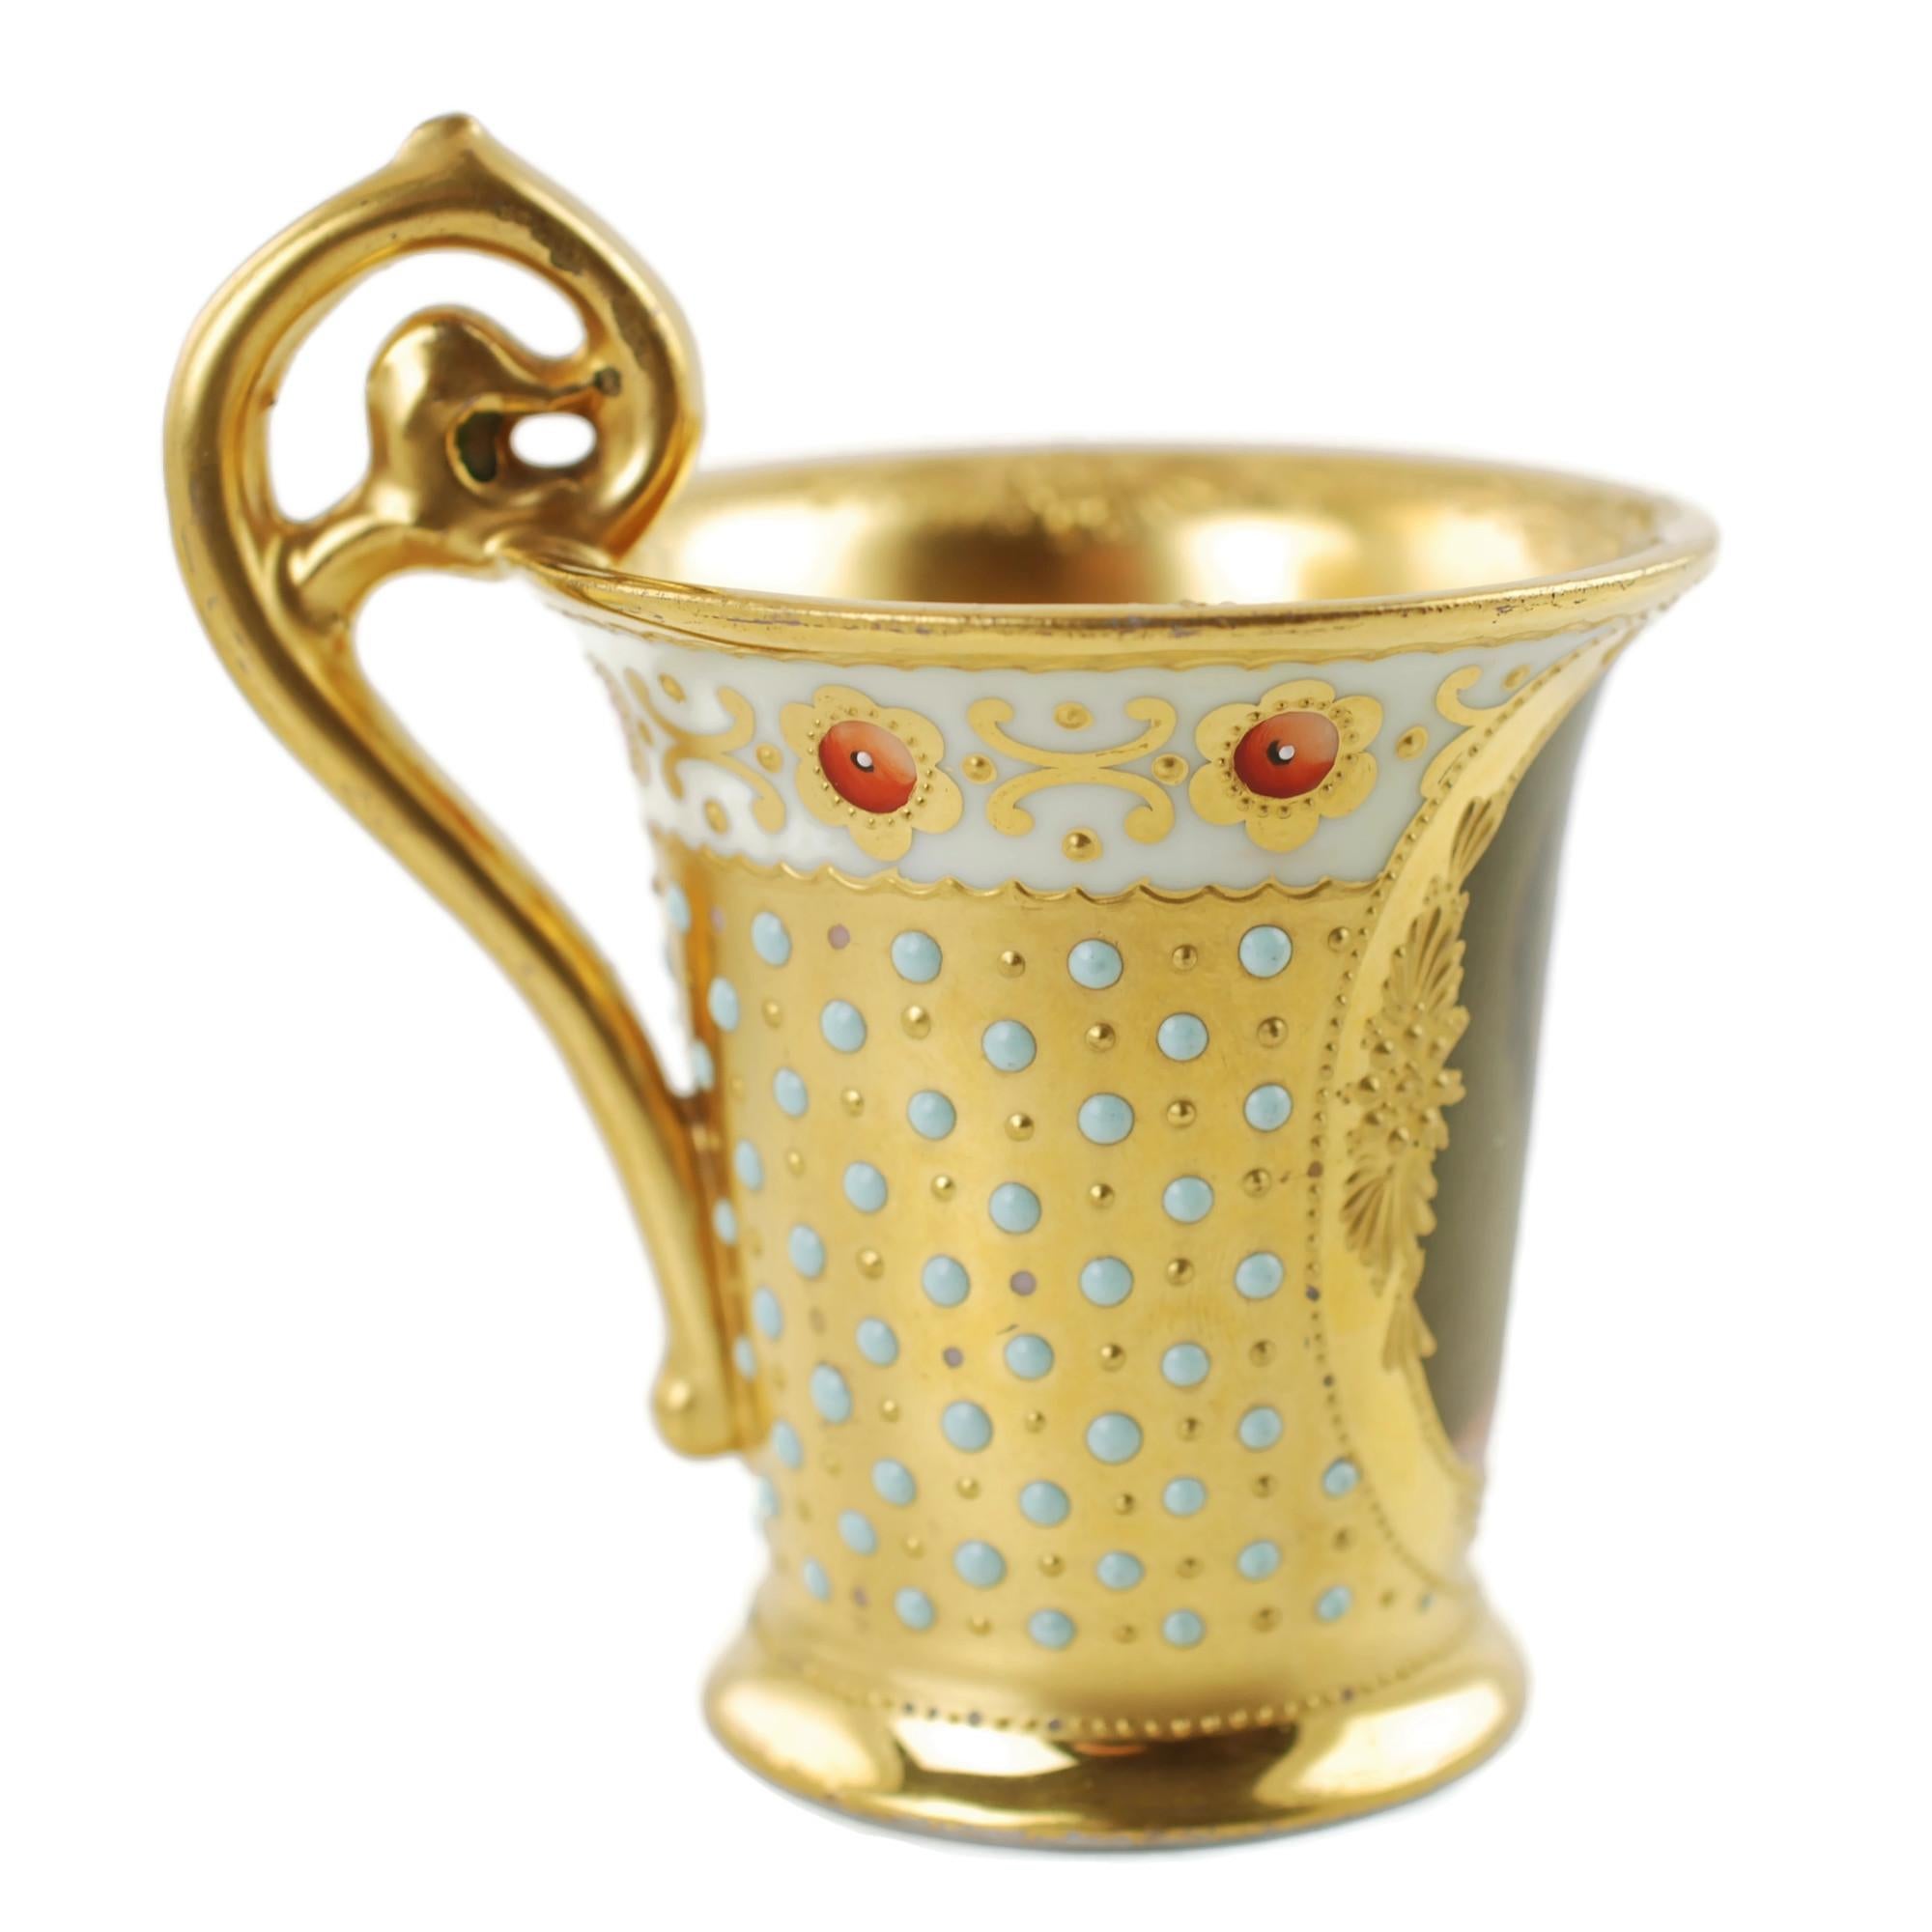 Enameled Antique Jeweled Gilt Encrusted Dresden Porcelain Signed Portrait Cup and Saucer